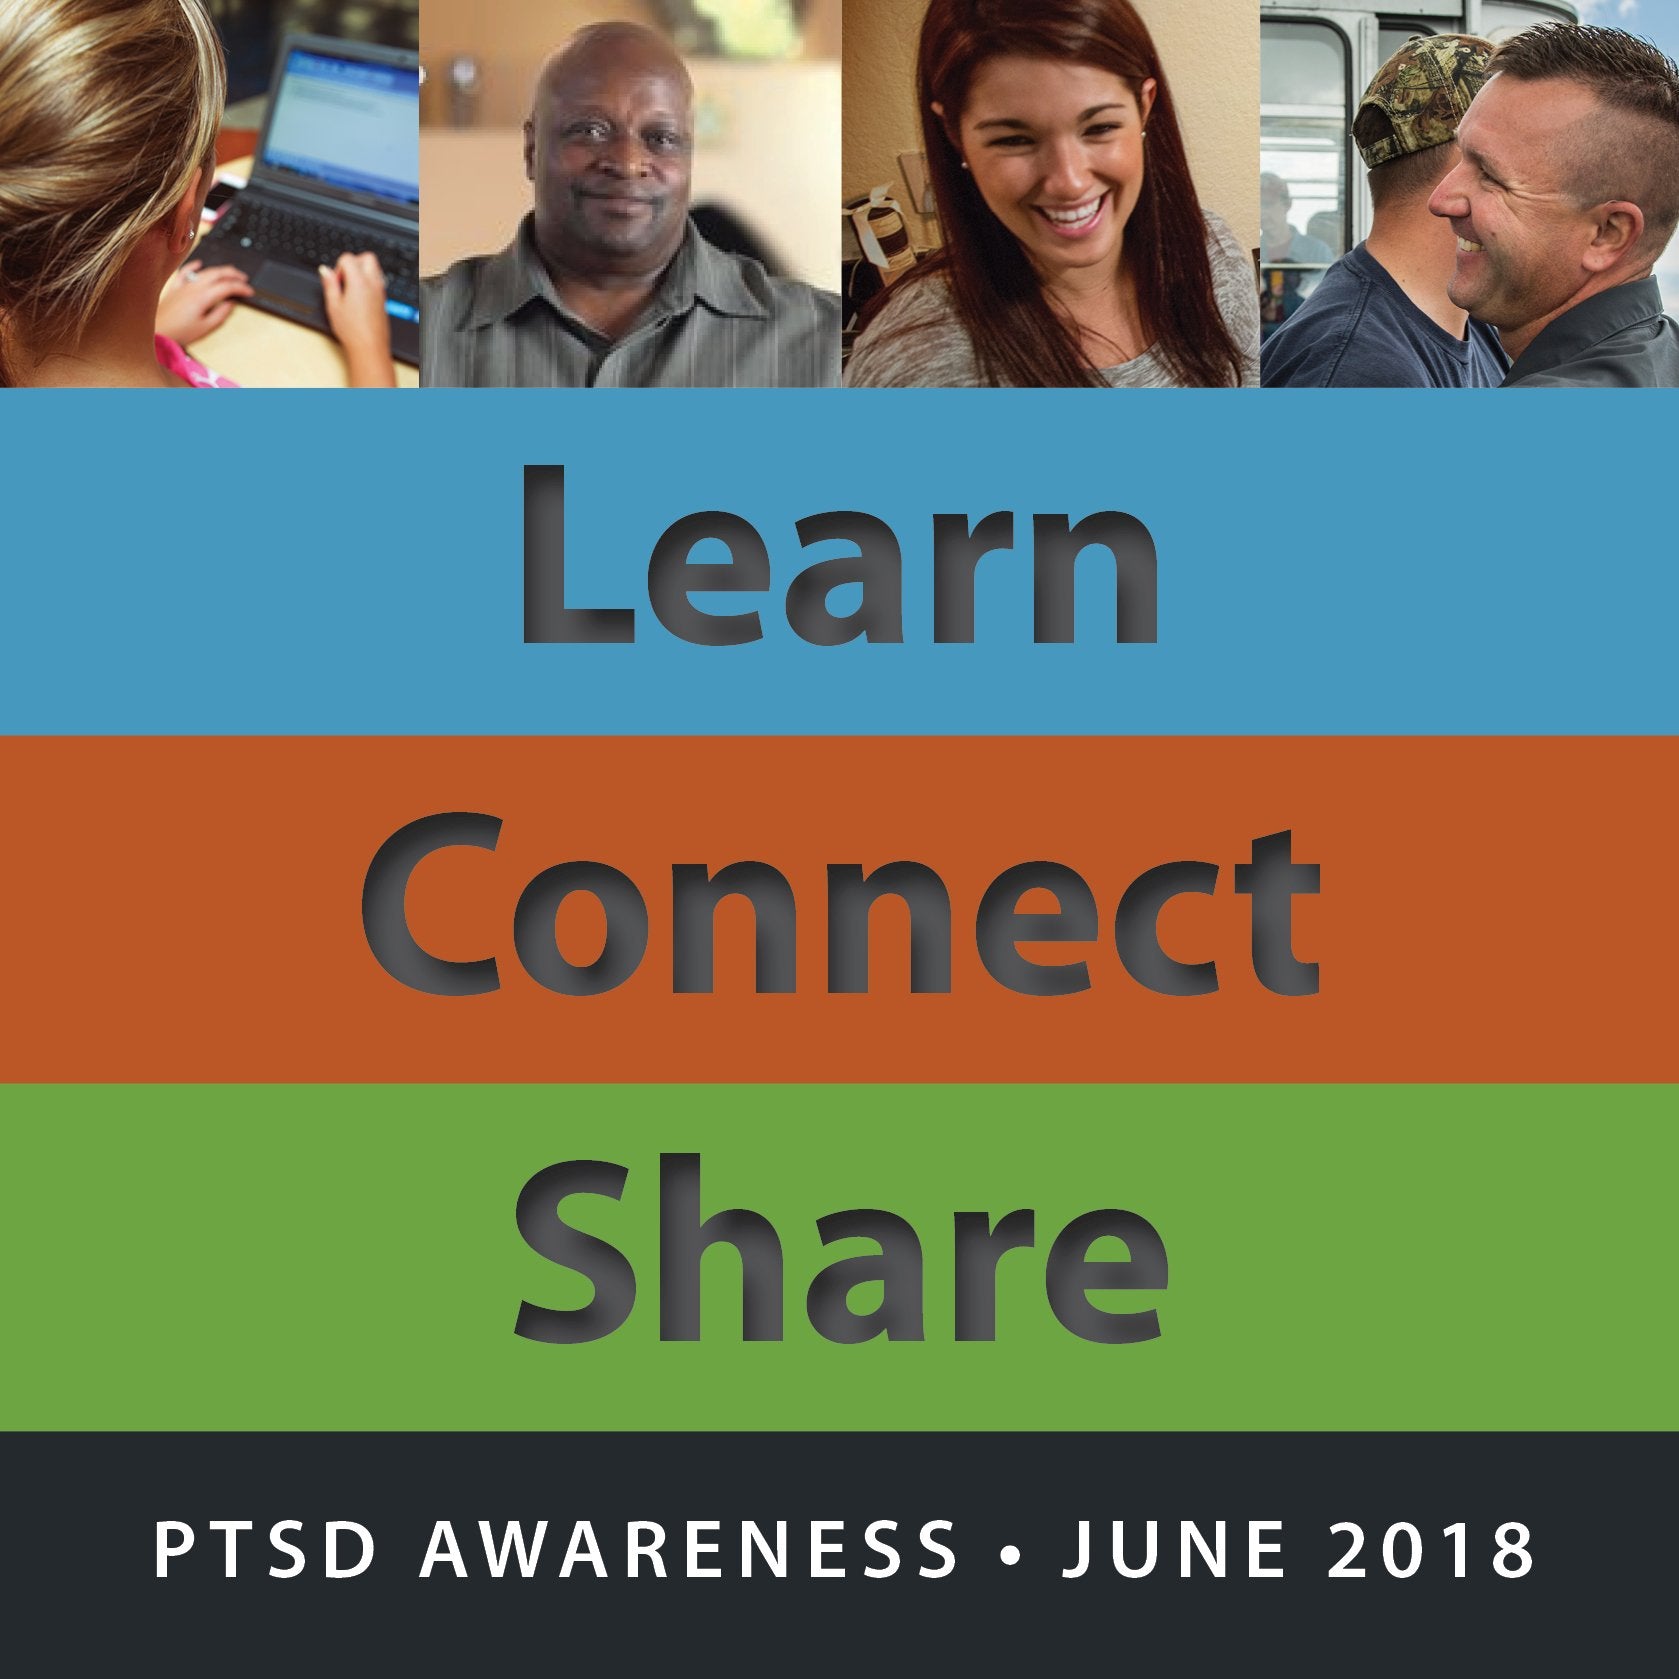 PTSD Awareness Month: Education, Awarness and Change.